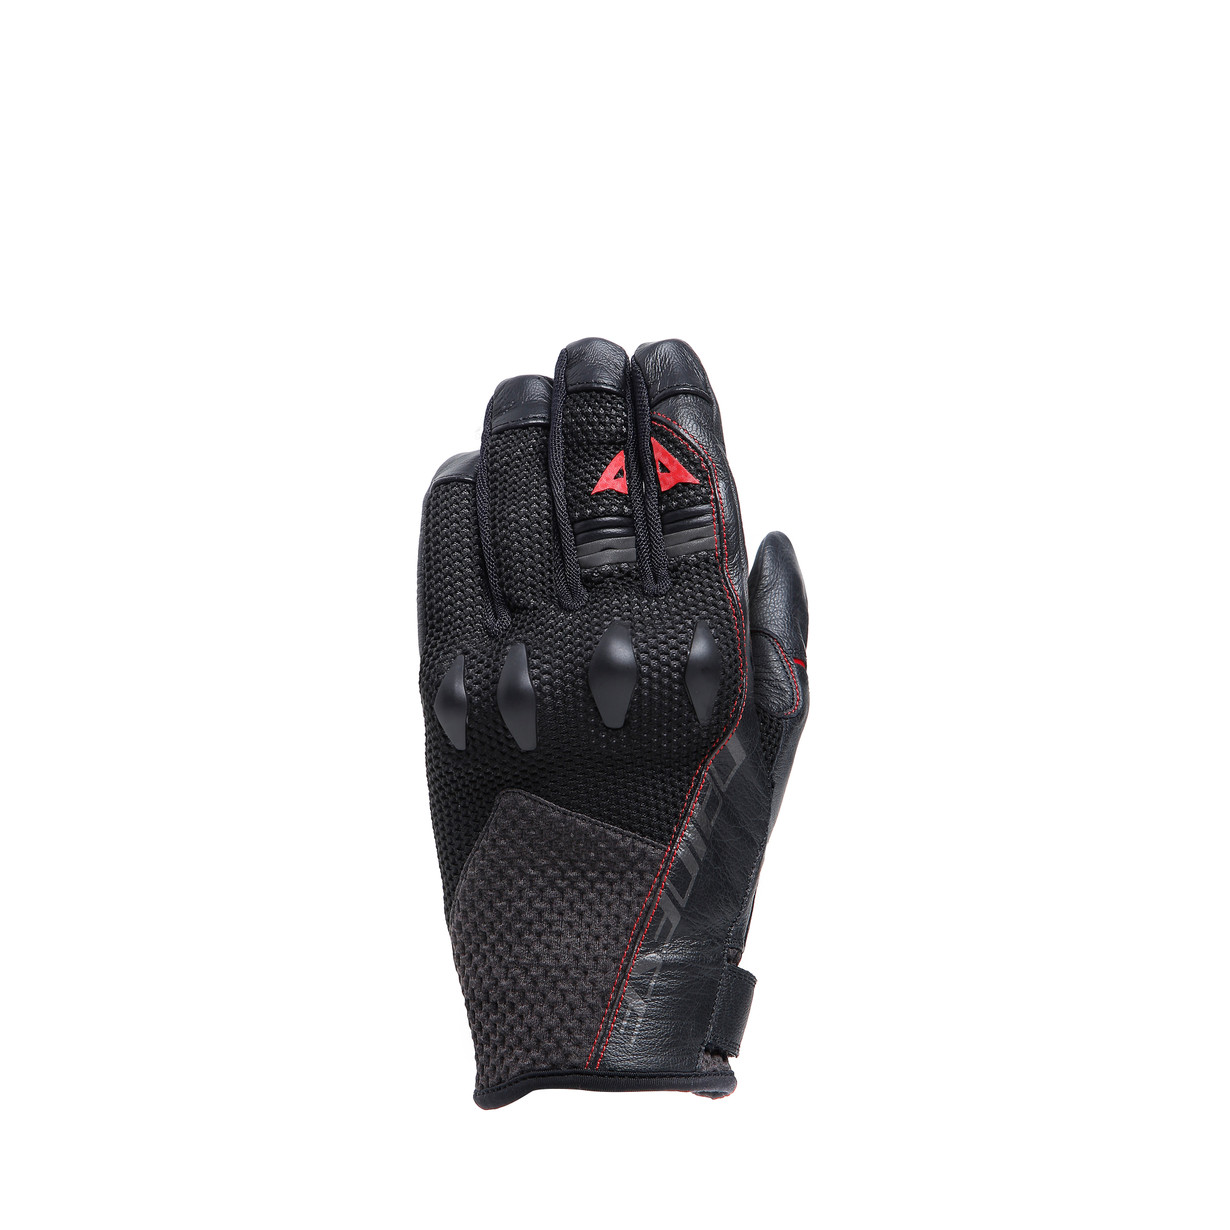 Guanti Da Moto Dainese Uomo Estivi Torino Gloves Black/Anthracite  Traspiranti